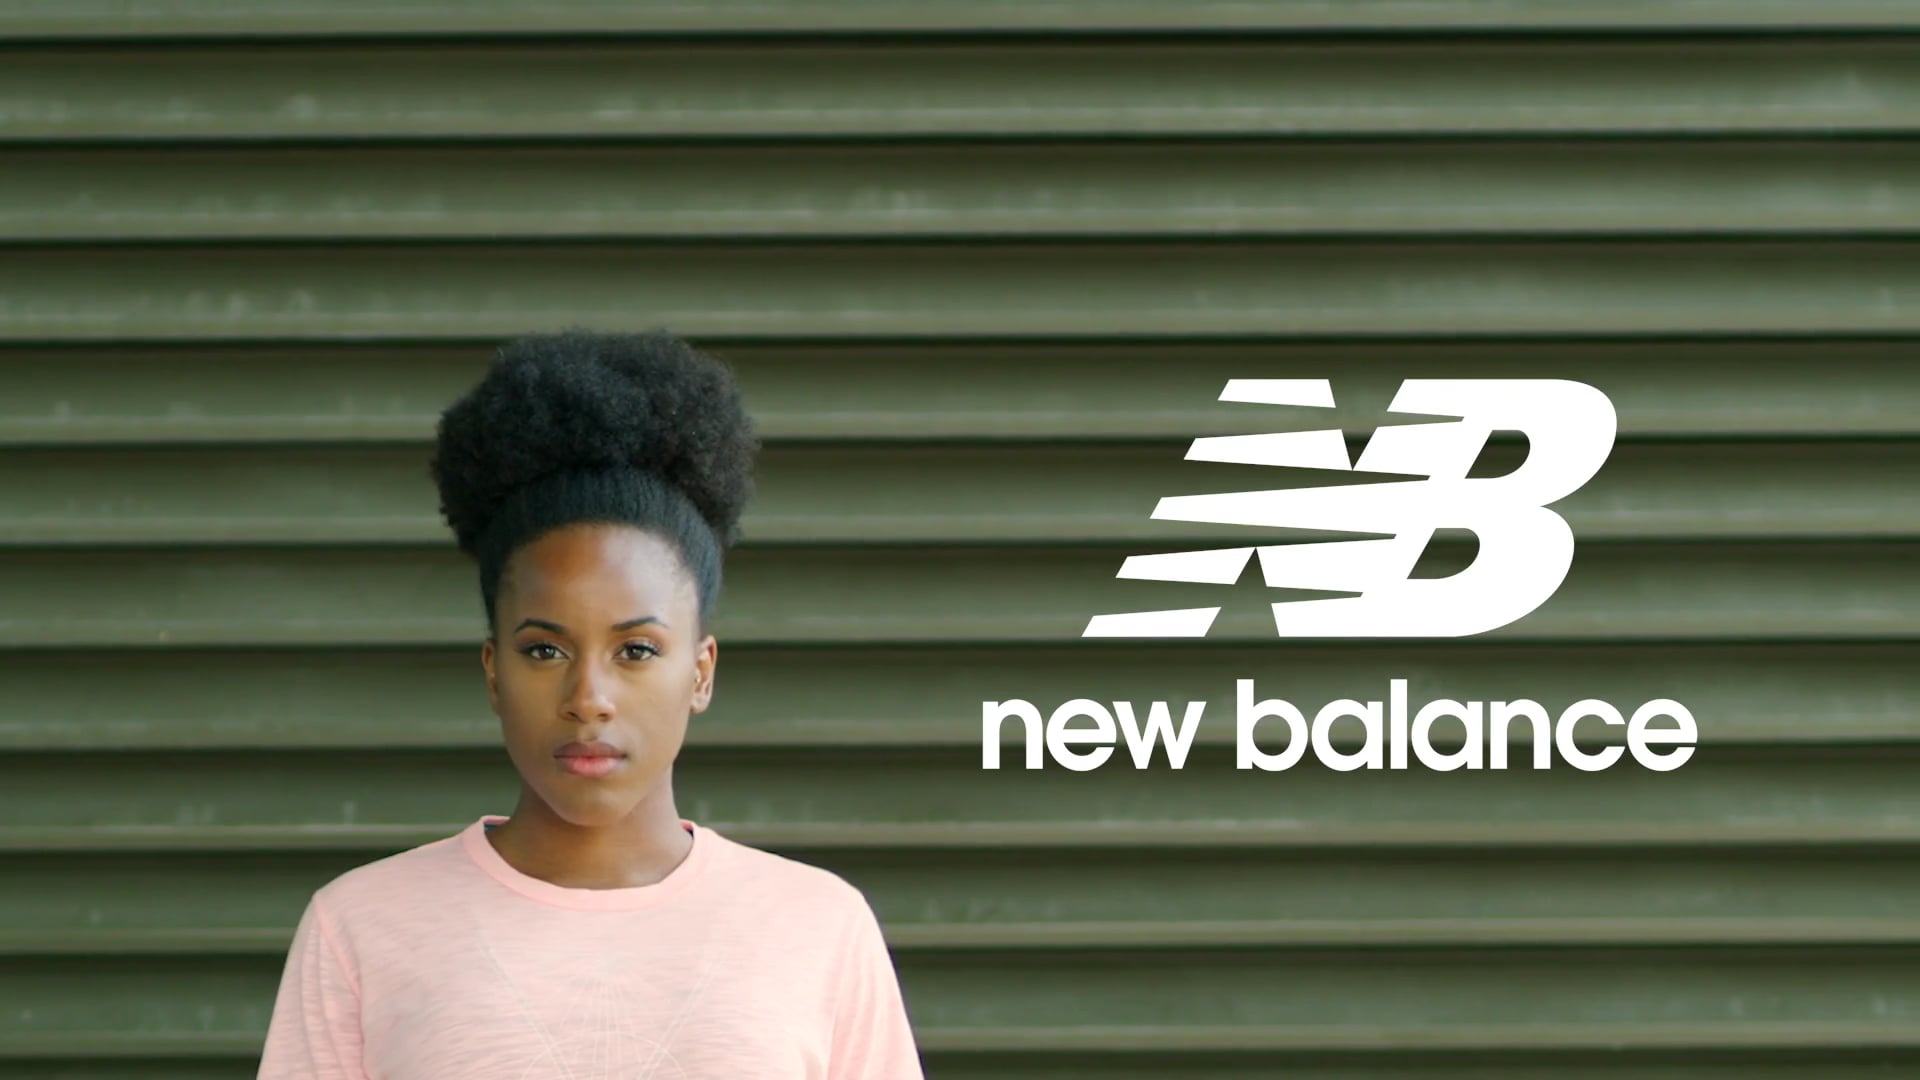 New Balance - You Do You